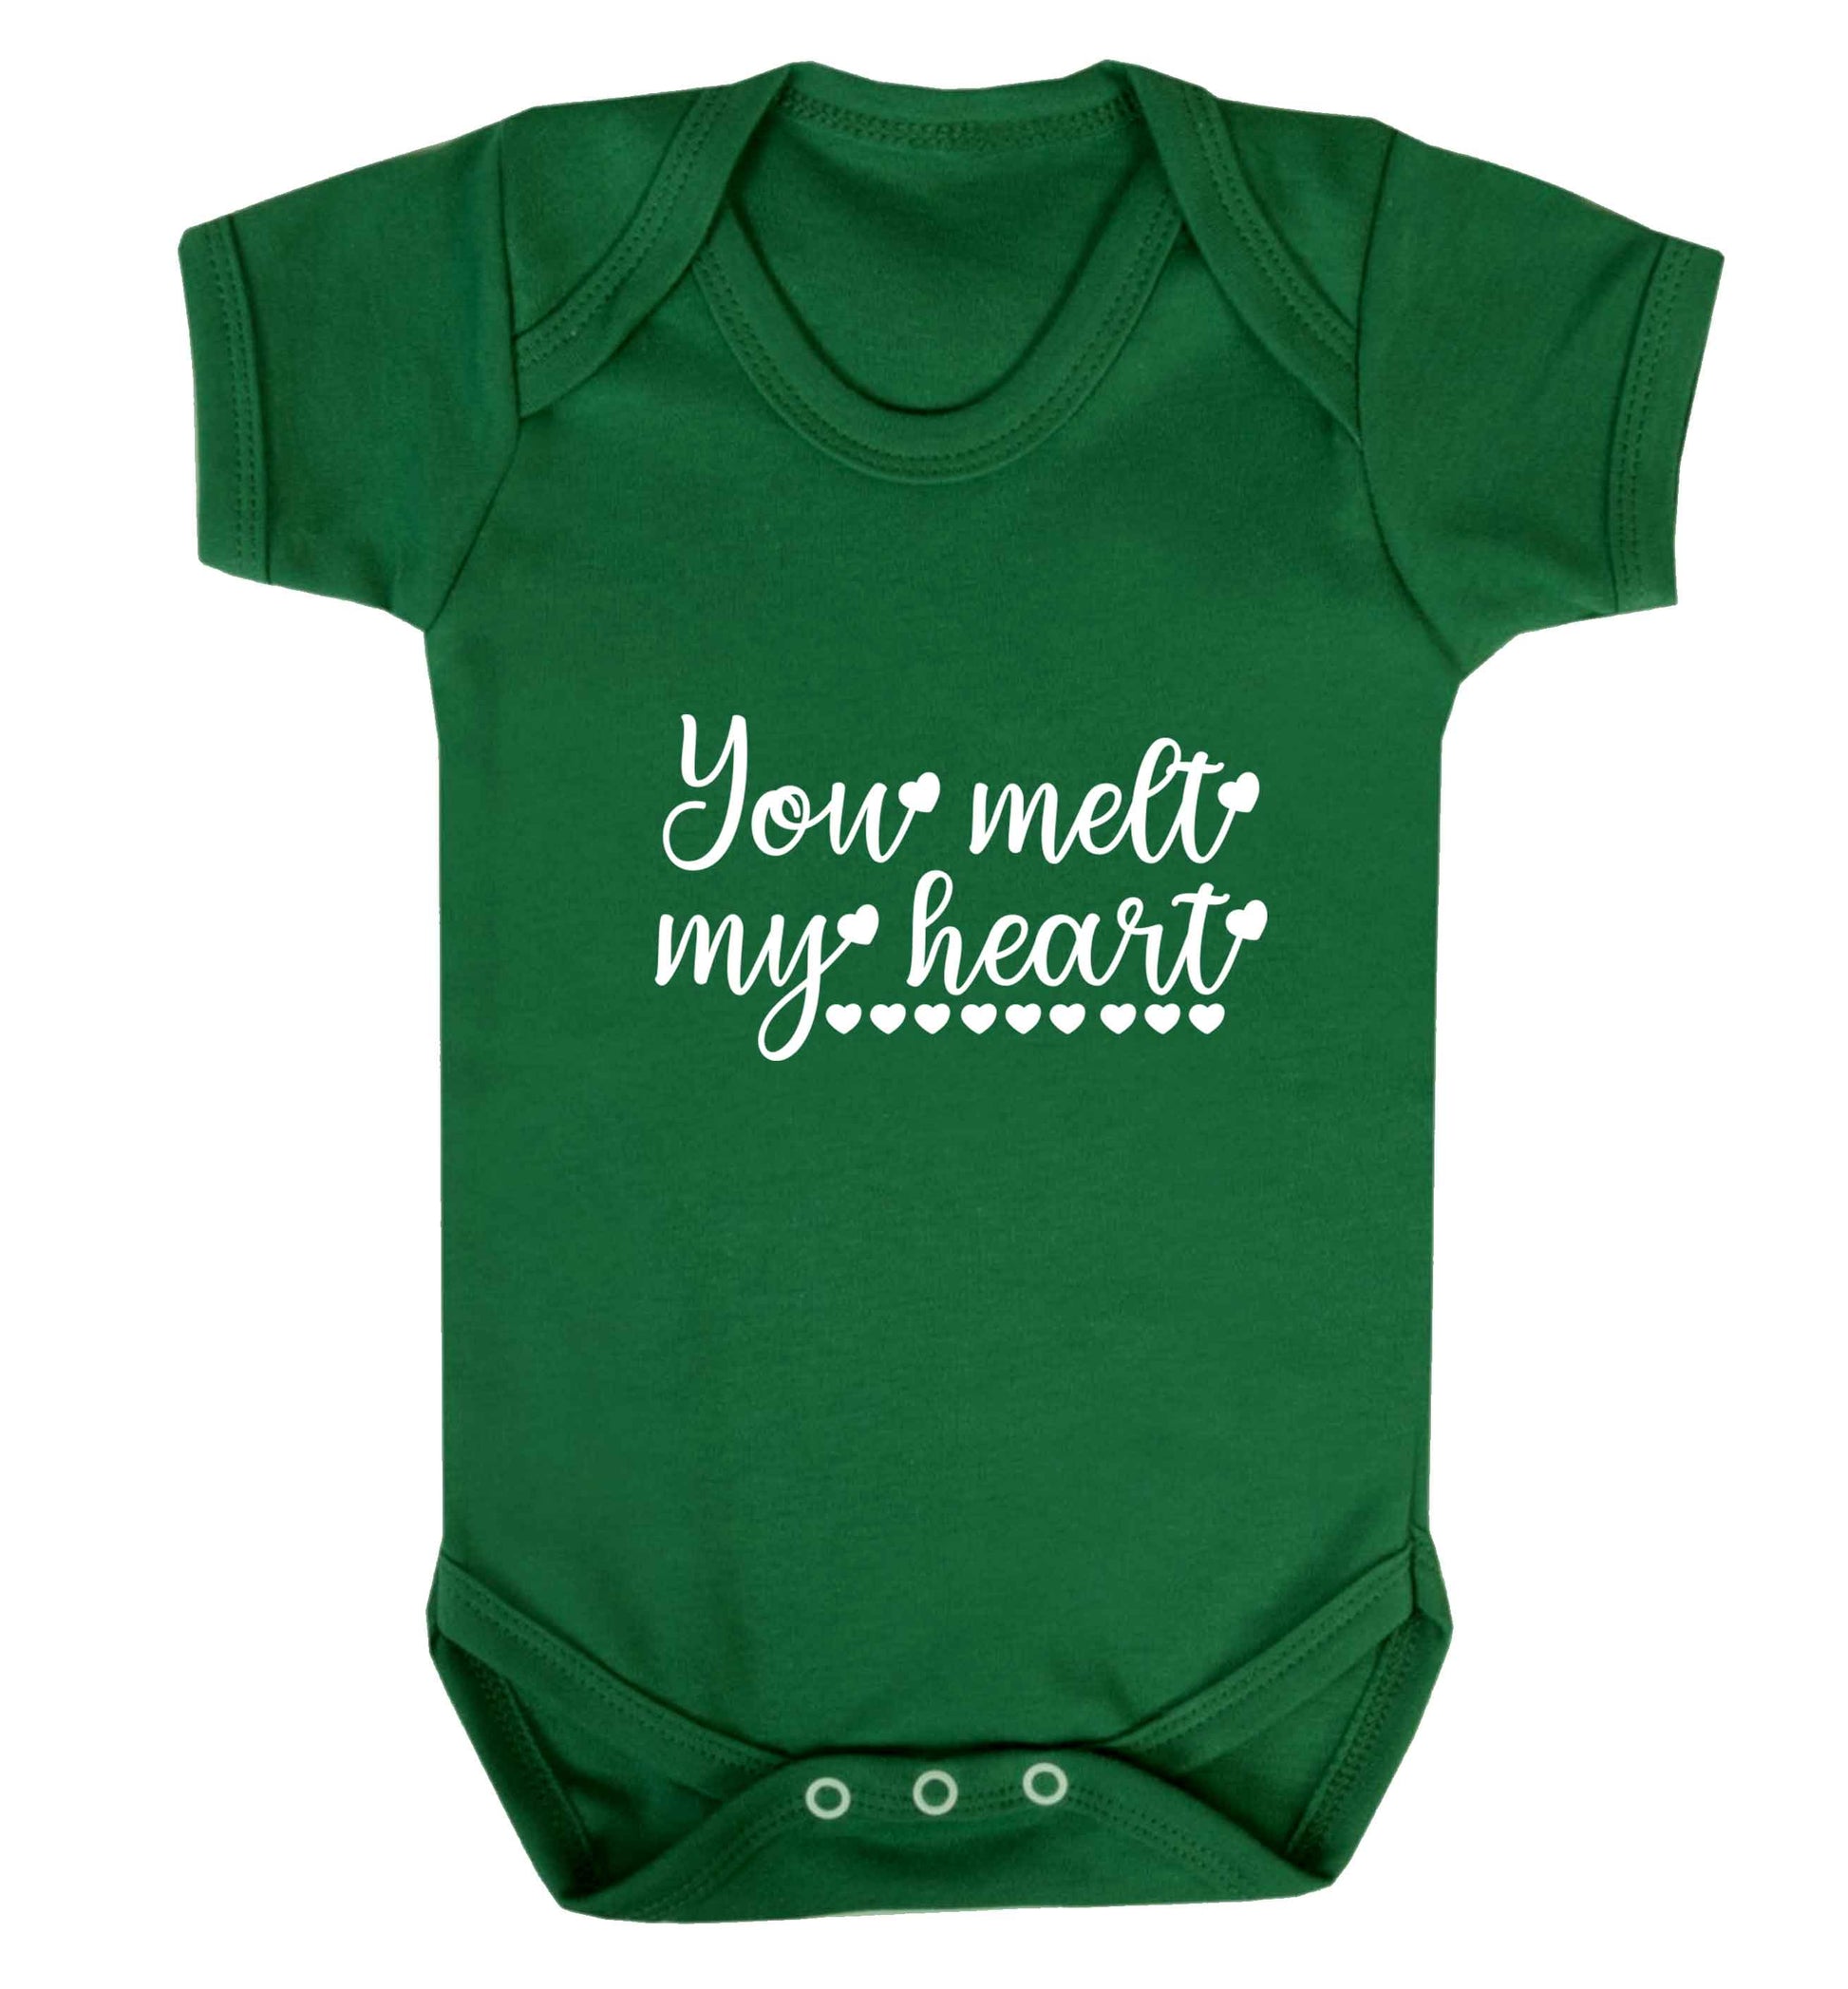 You melt my heart baby vest green 18-24 months